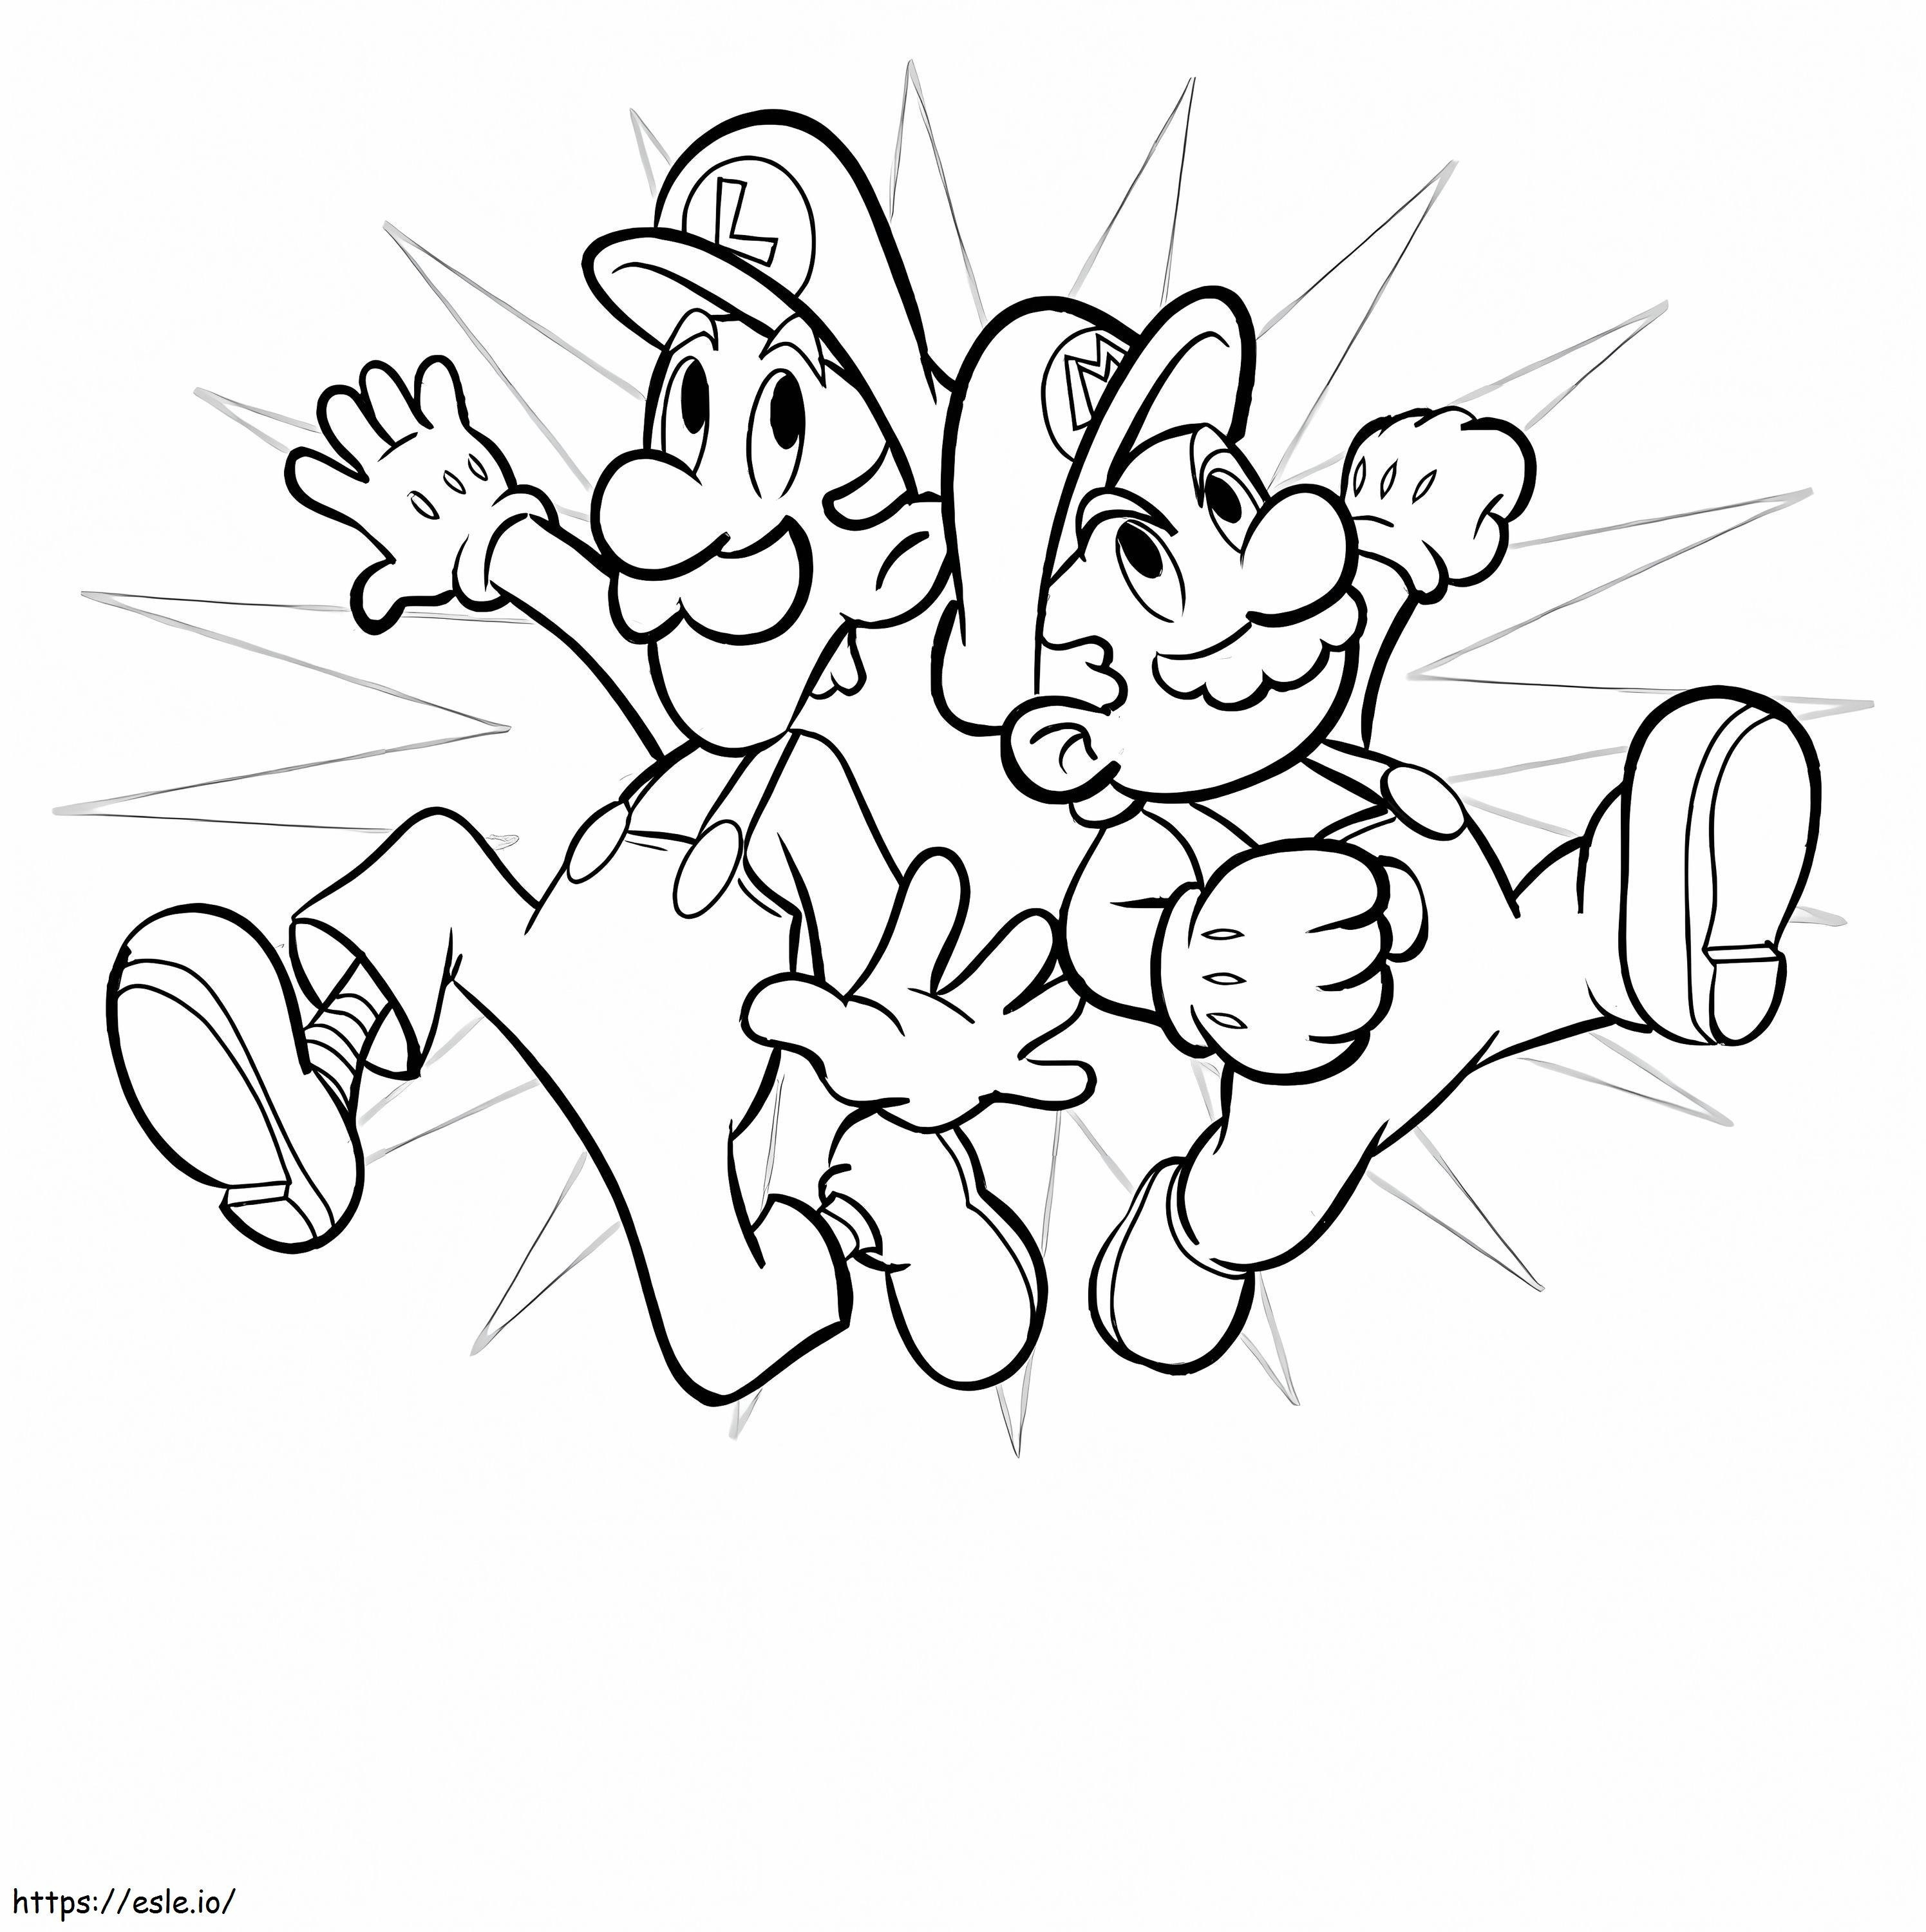 Legal Luigi e Mário para colorir